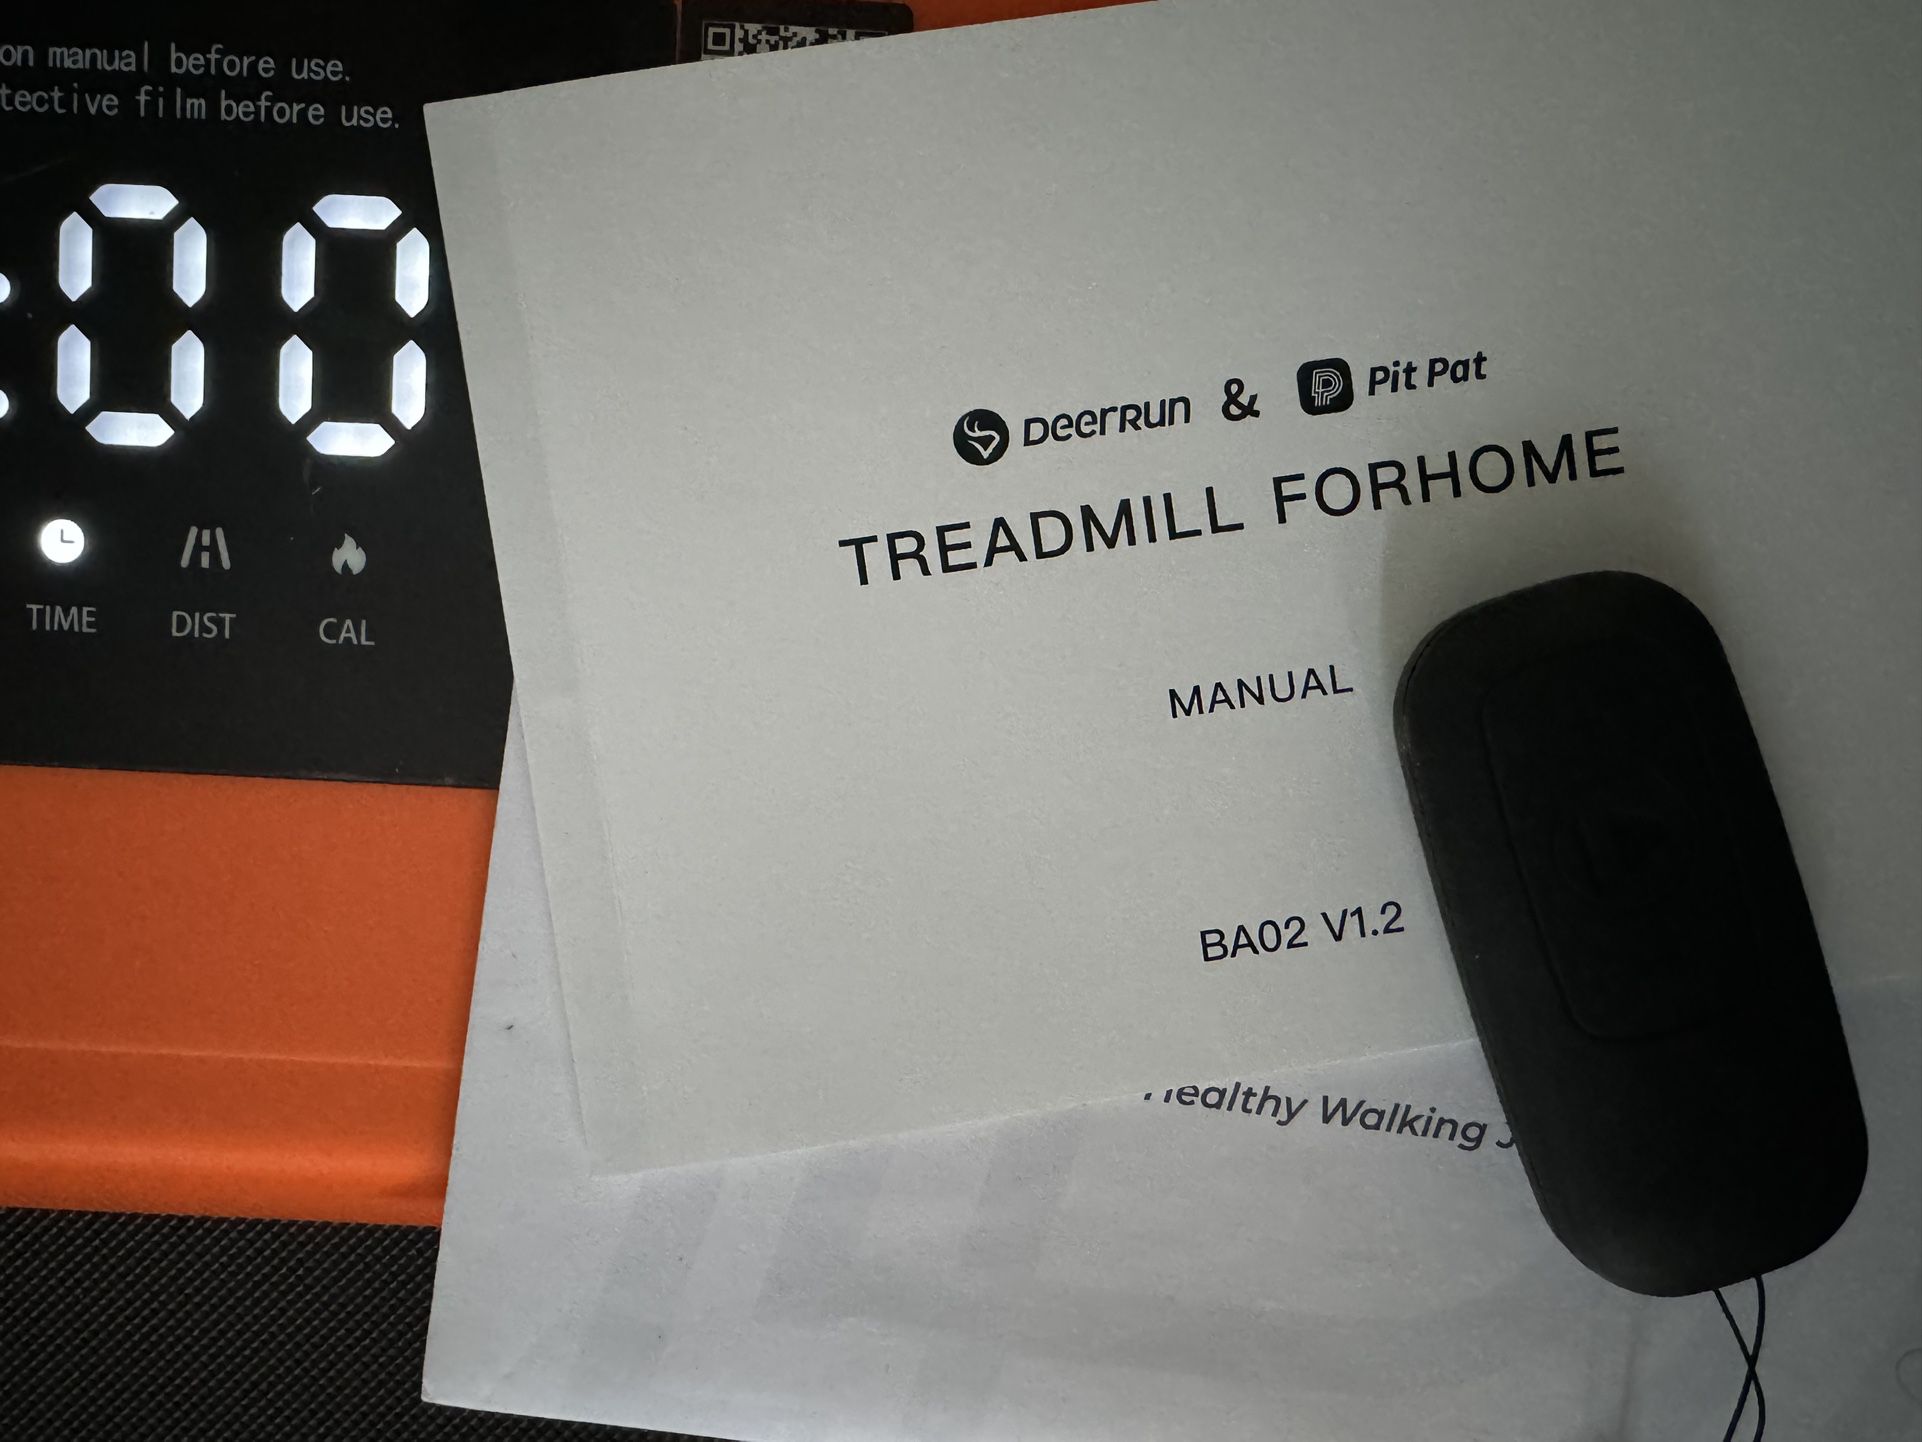 DeerRun Treadmill For Home